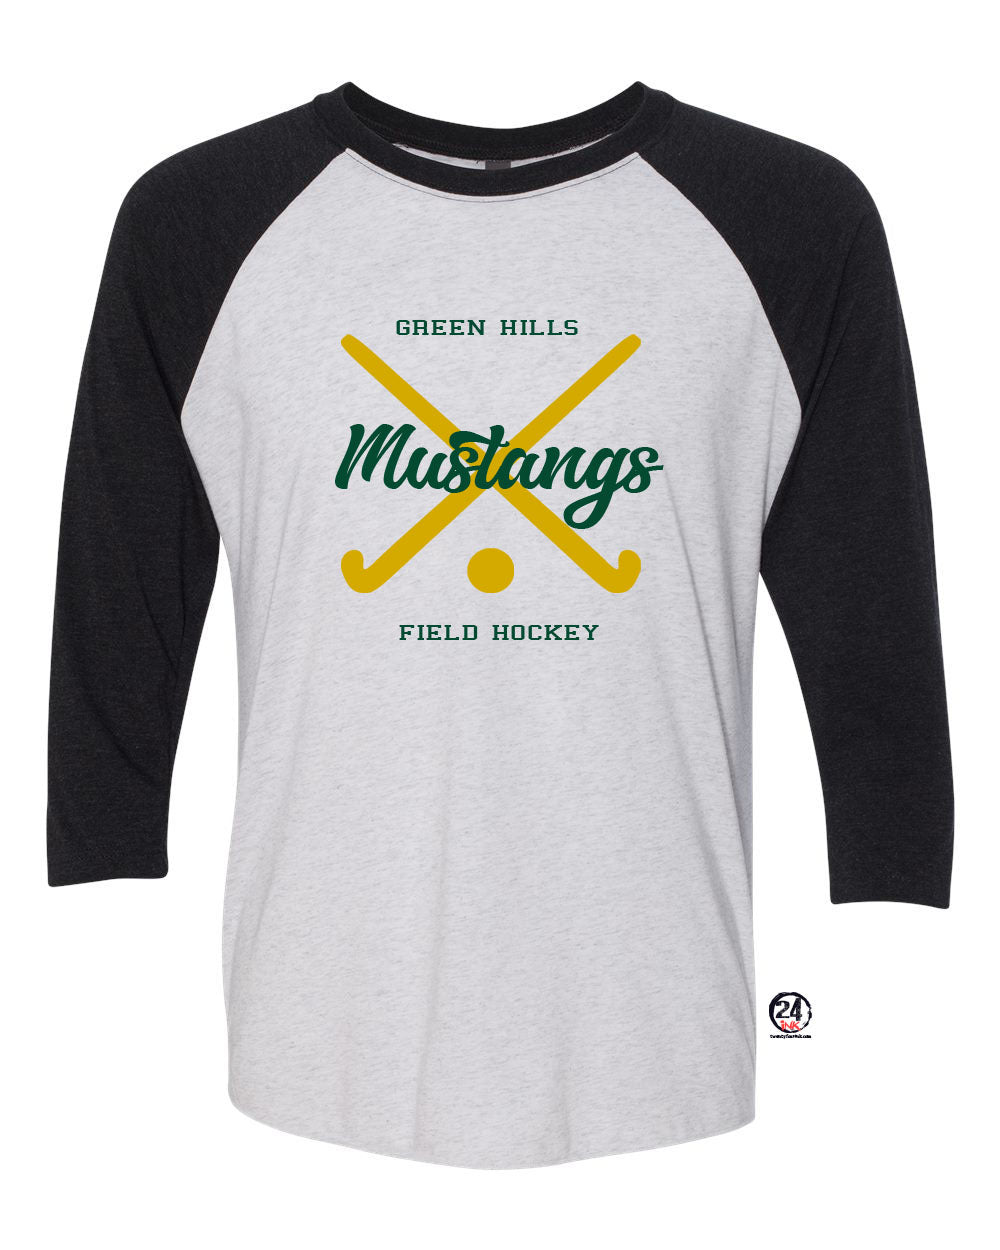 Green Hills Field Hockey design 2 raglan shirt